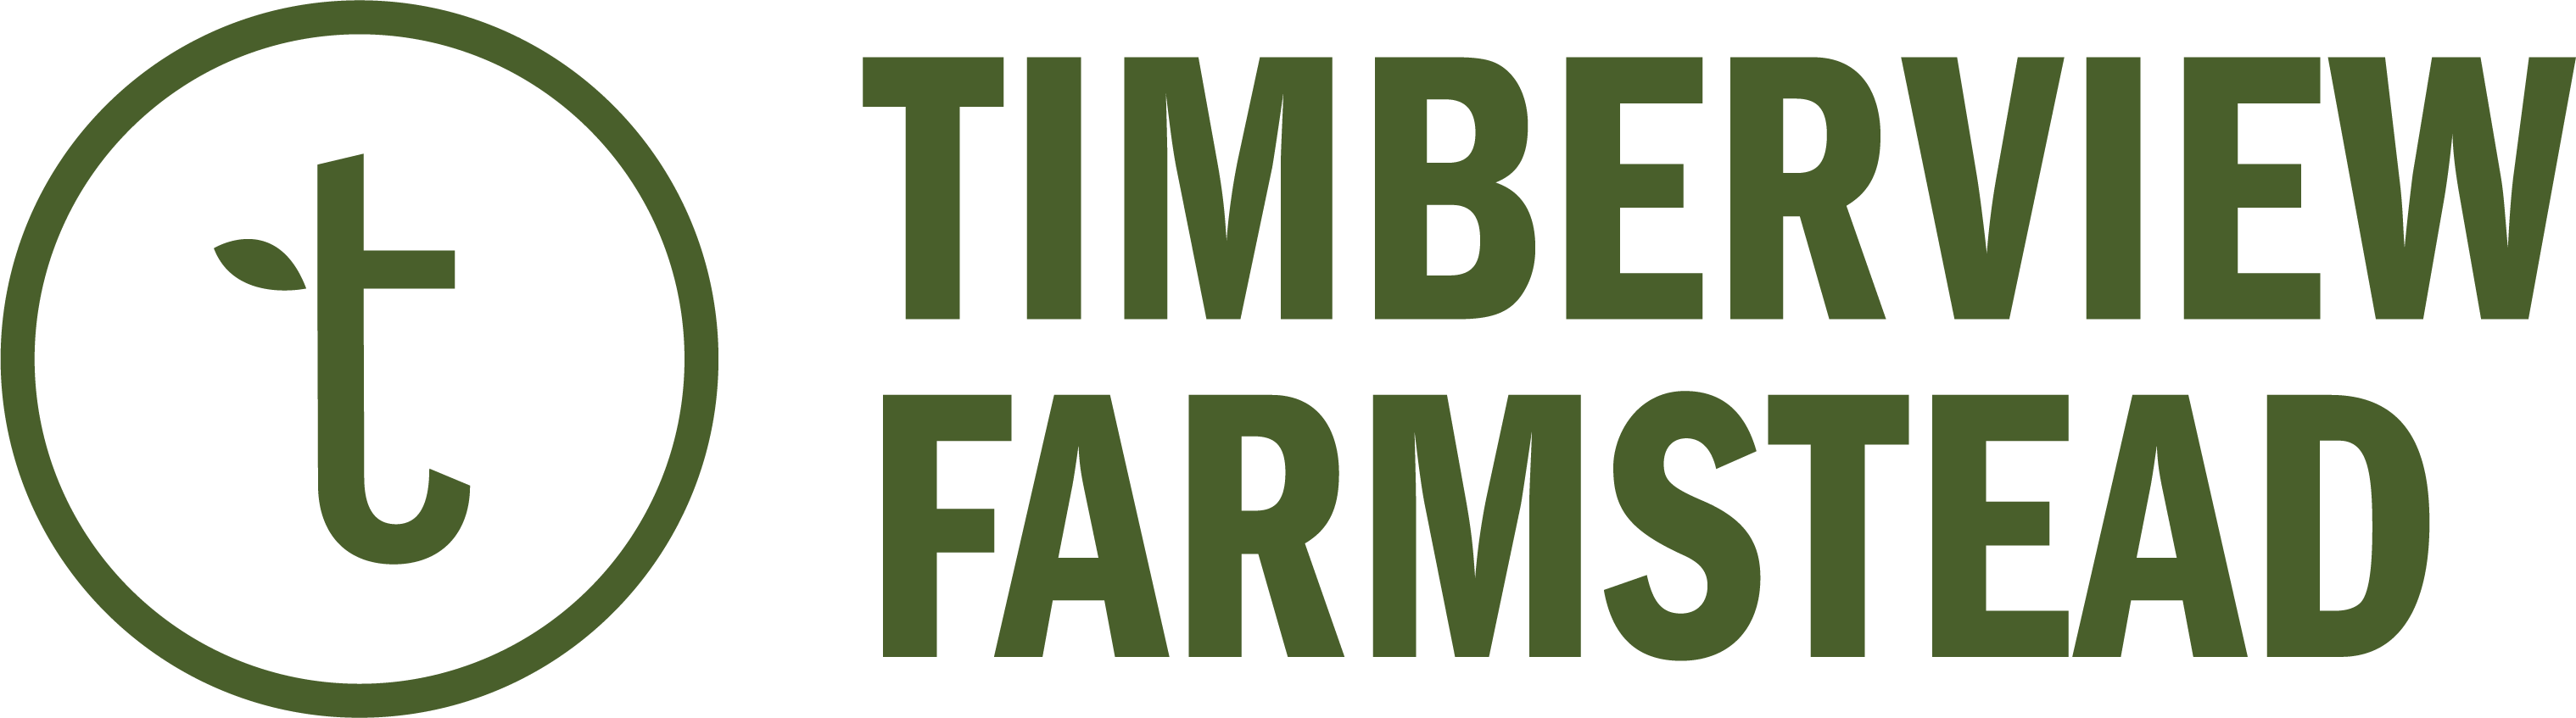 Timberview Farmstead